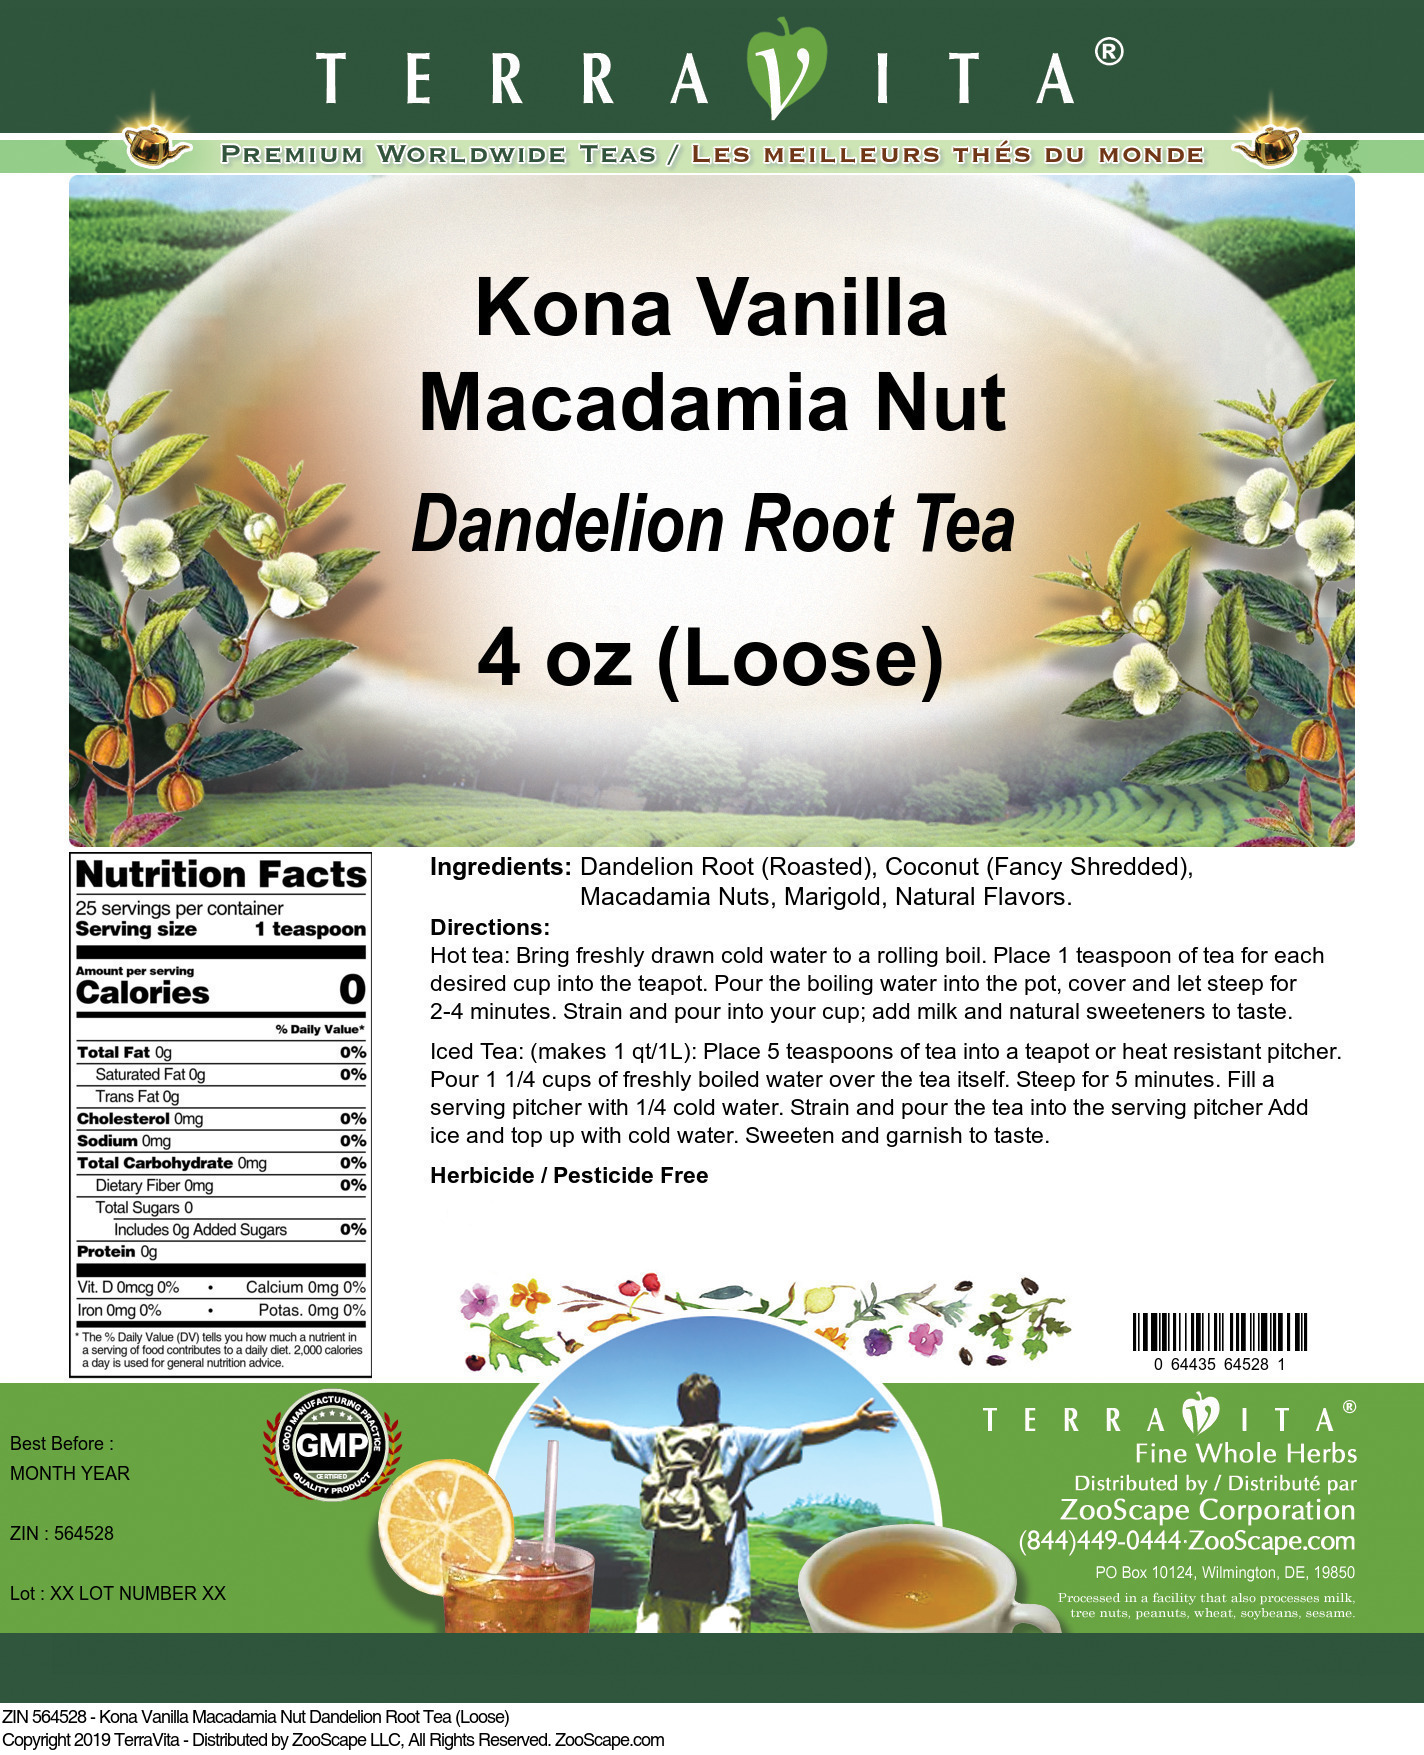 Kona Vanilla Macadamia Nut Dandelion Root Tea (Loose) - Label